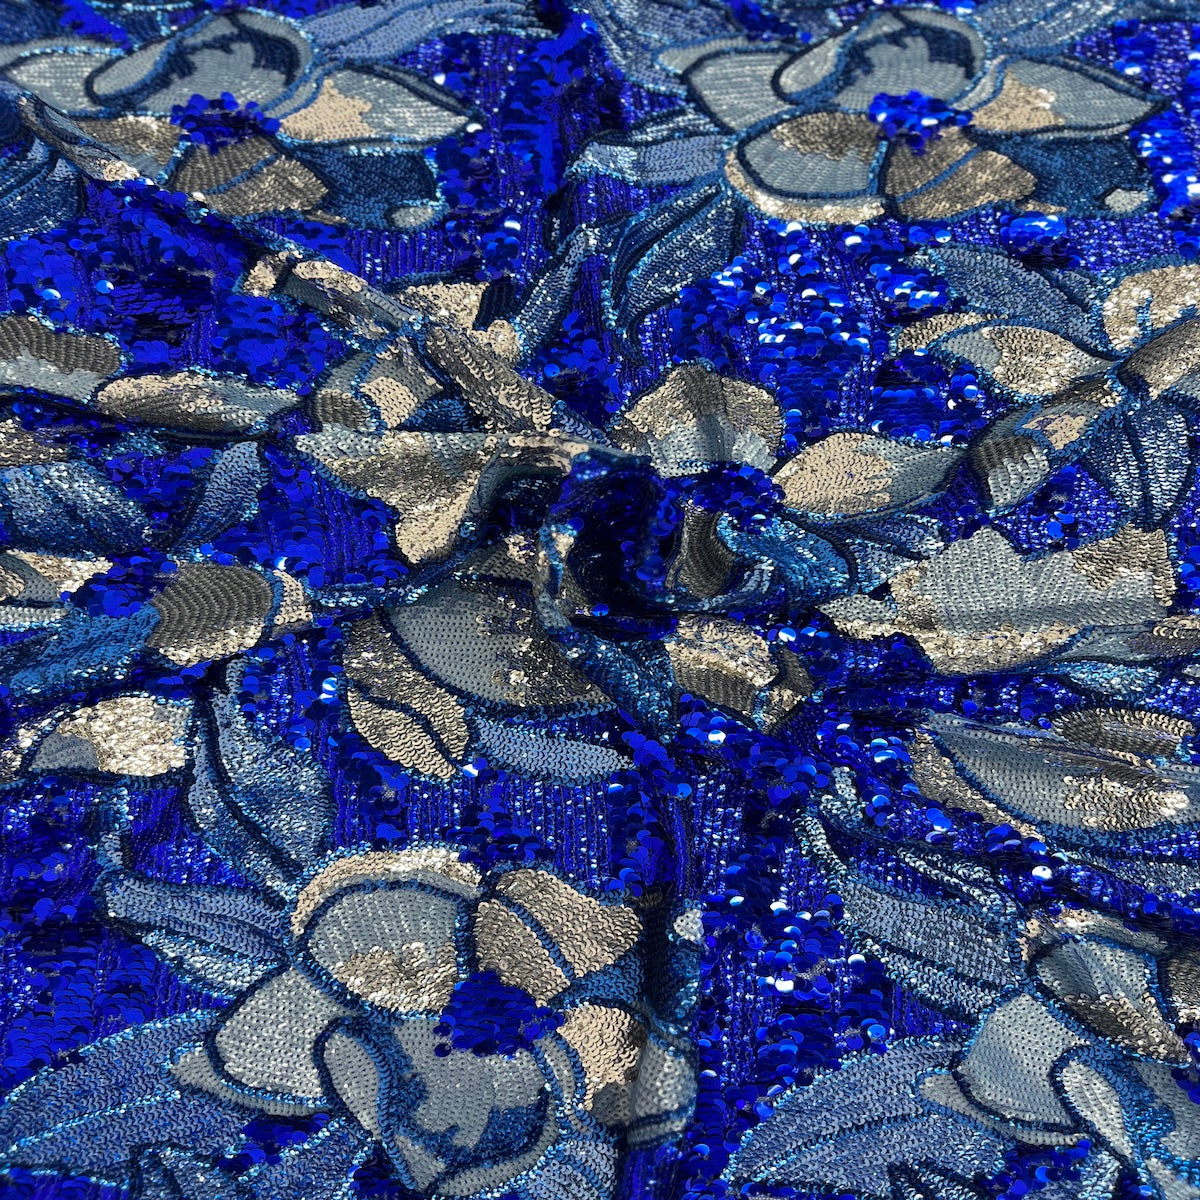 Tela de lentejuelas florales multicolor Giselle azul real